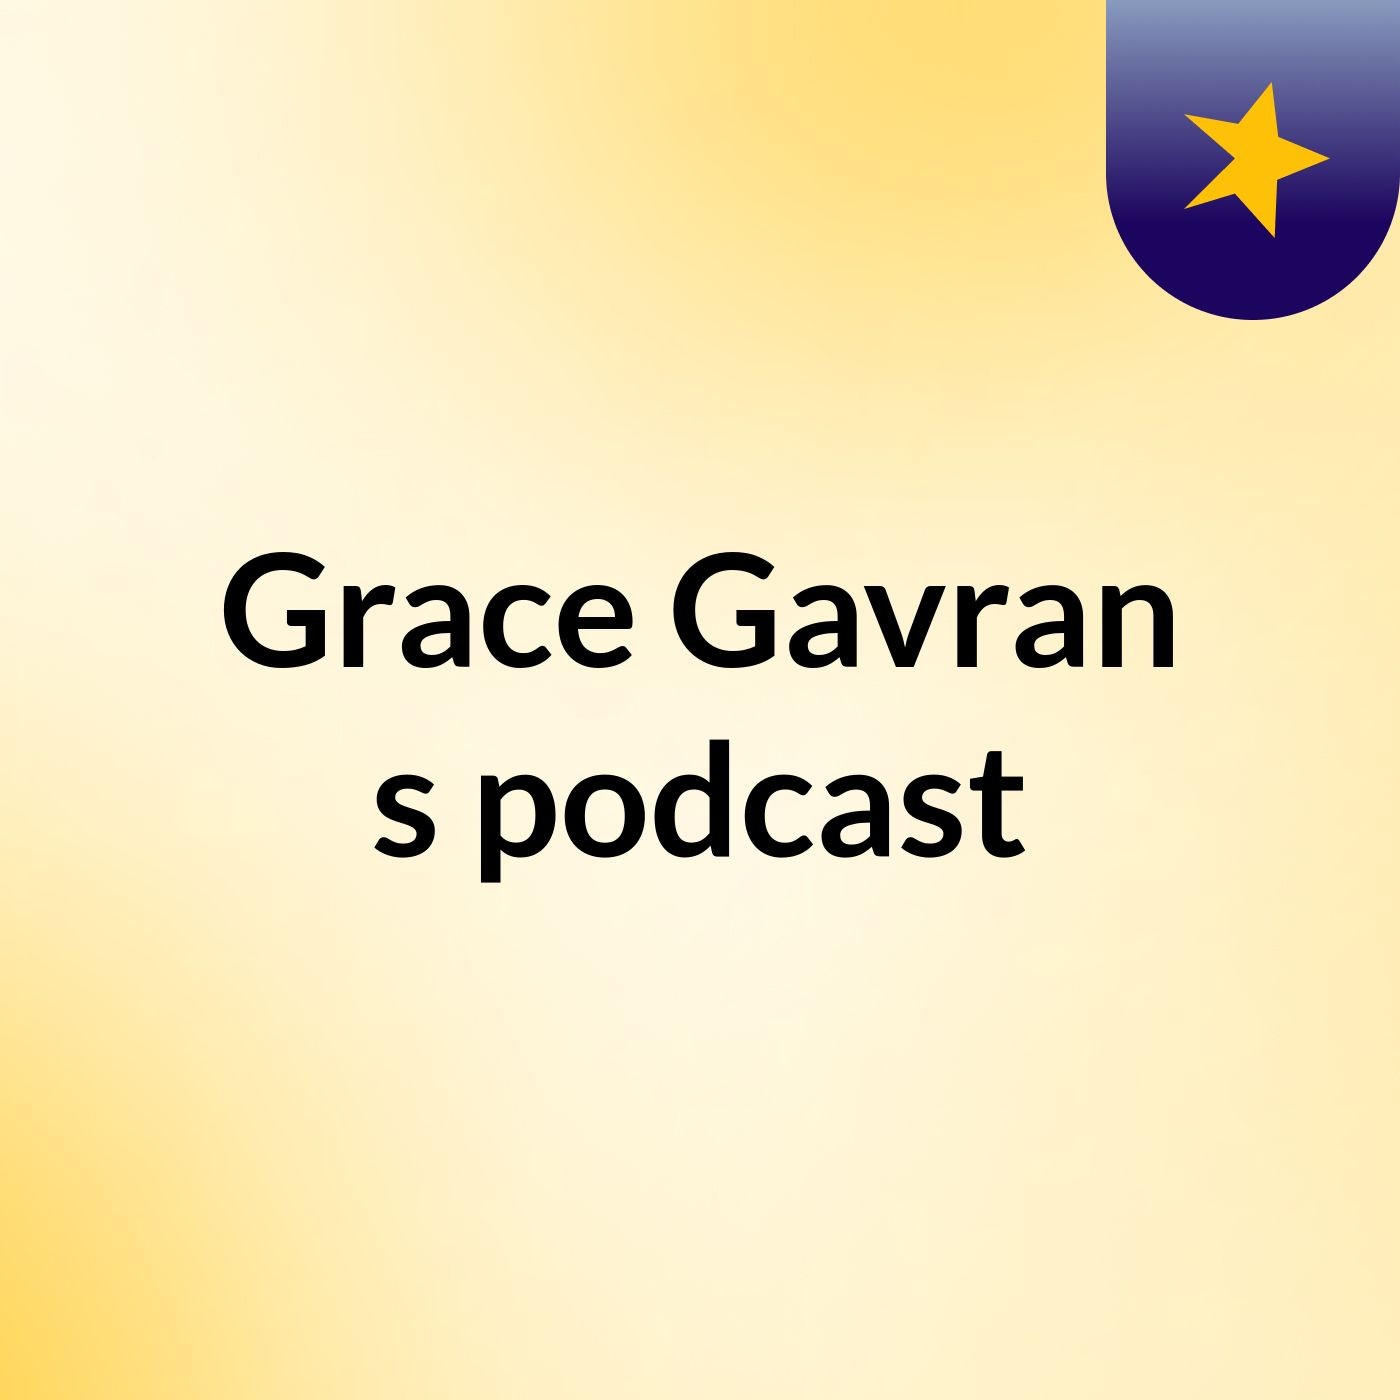 Grace Gavran's podcast